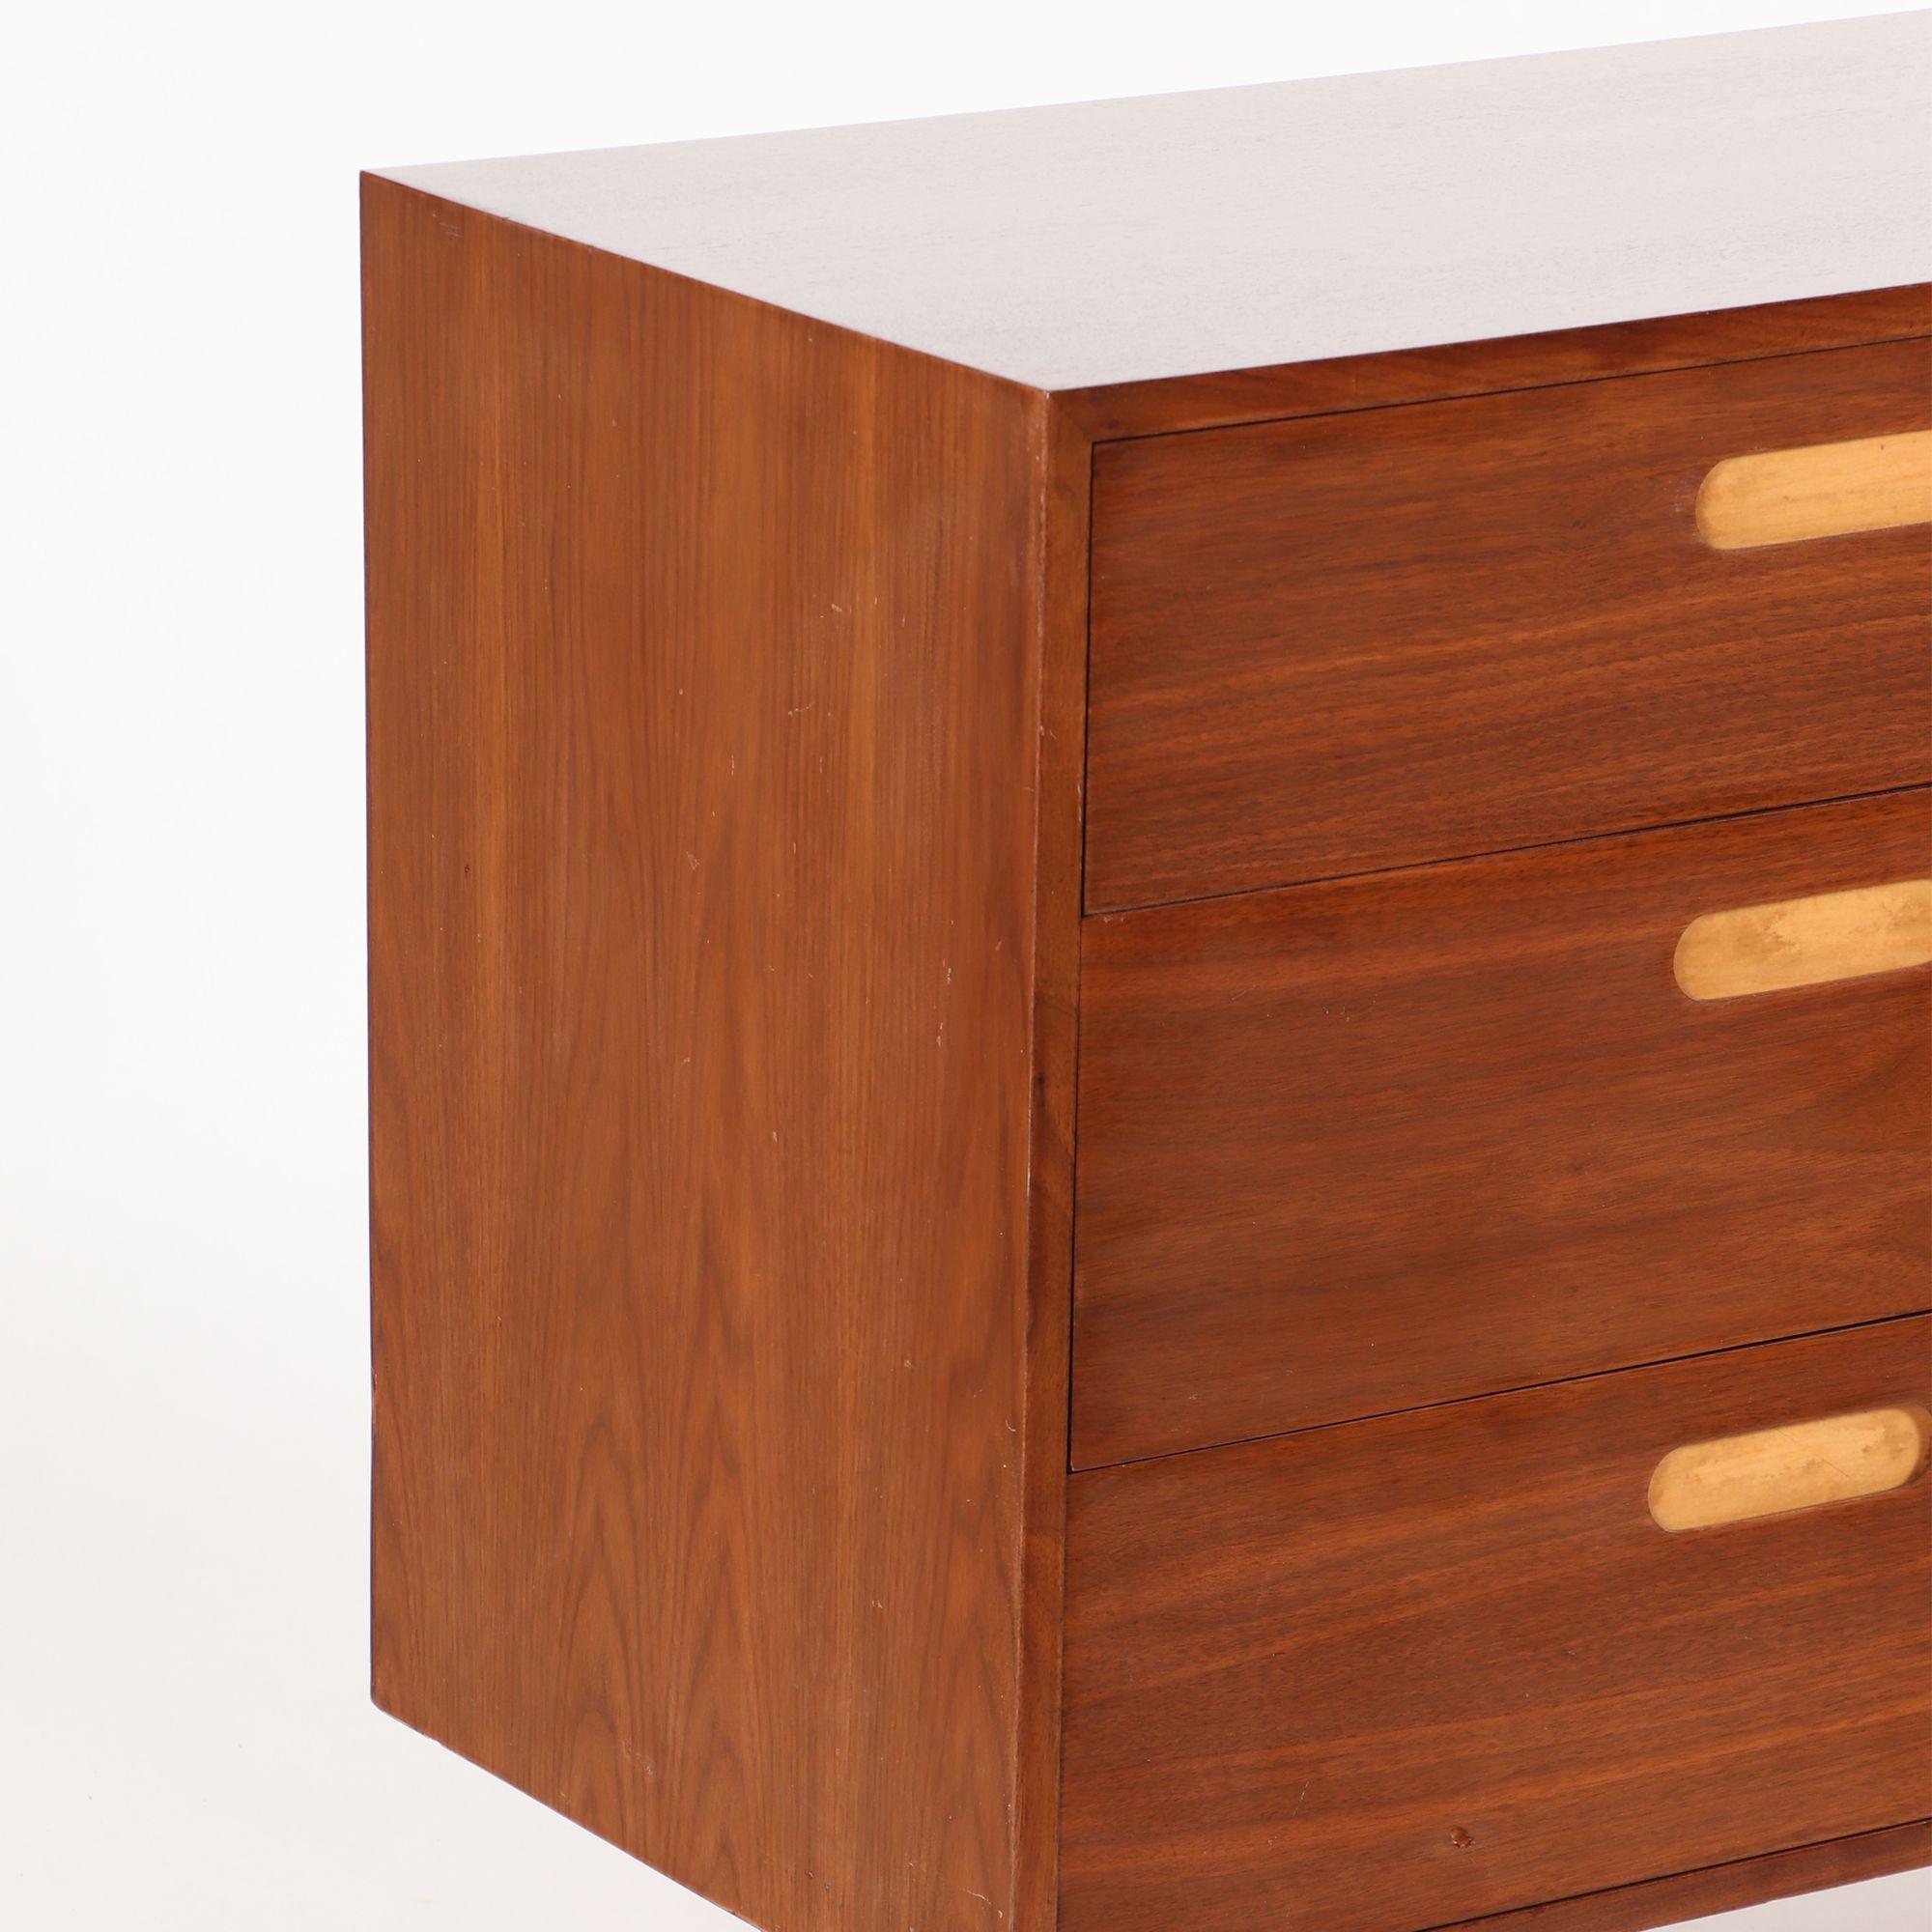 A Mid-Century Modern six drawers walnut dresser with recessed drawer pulls, circa 1960.